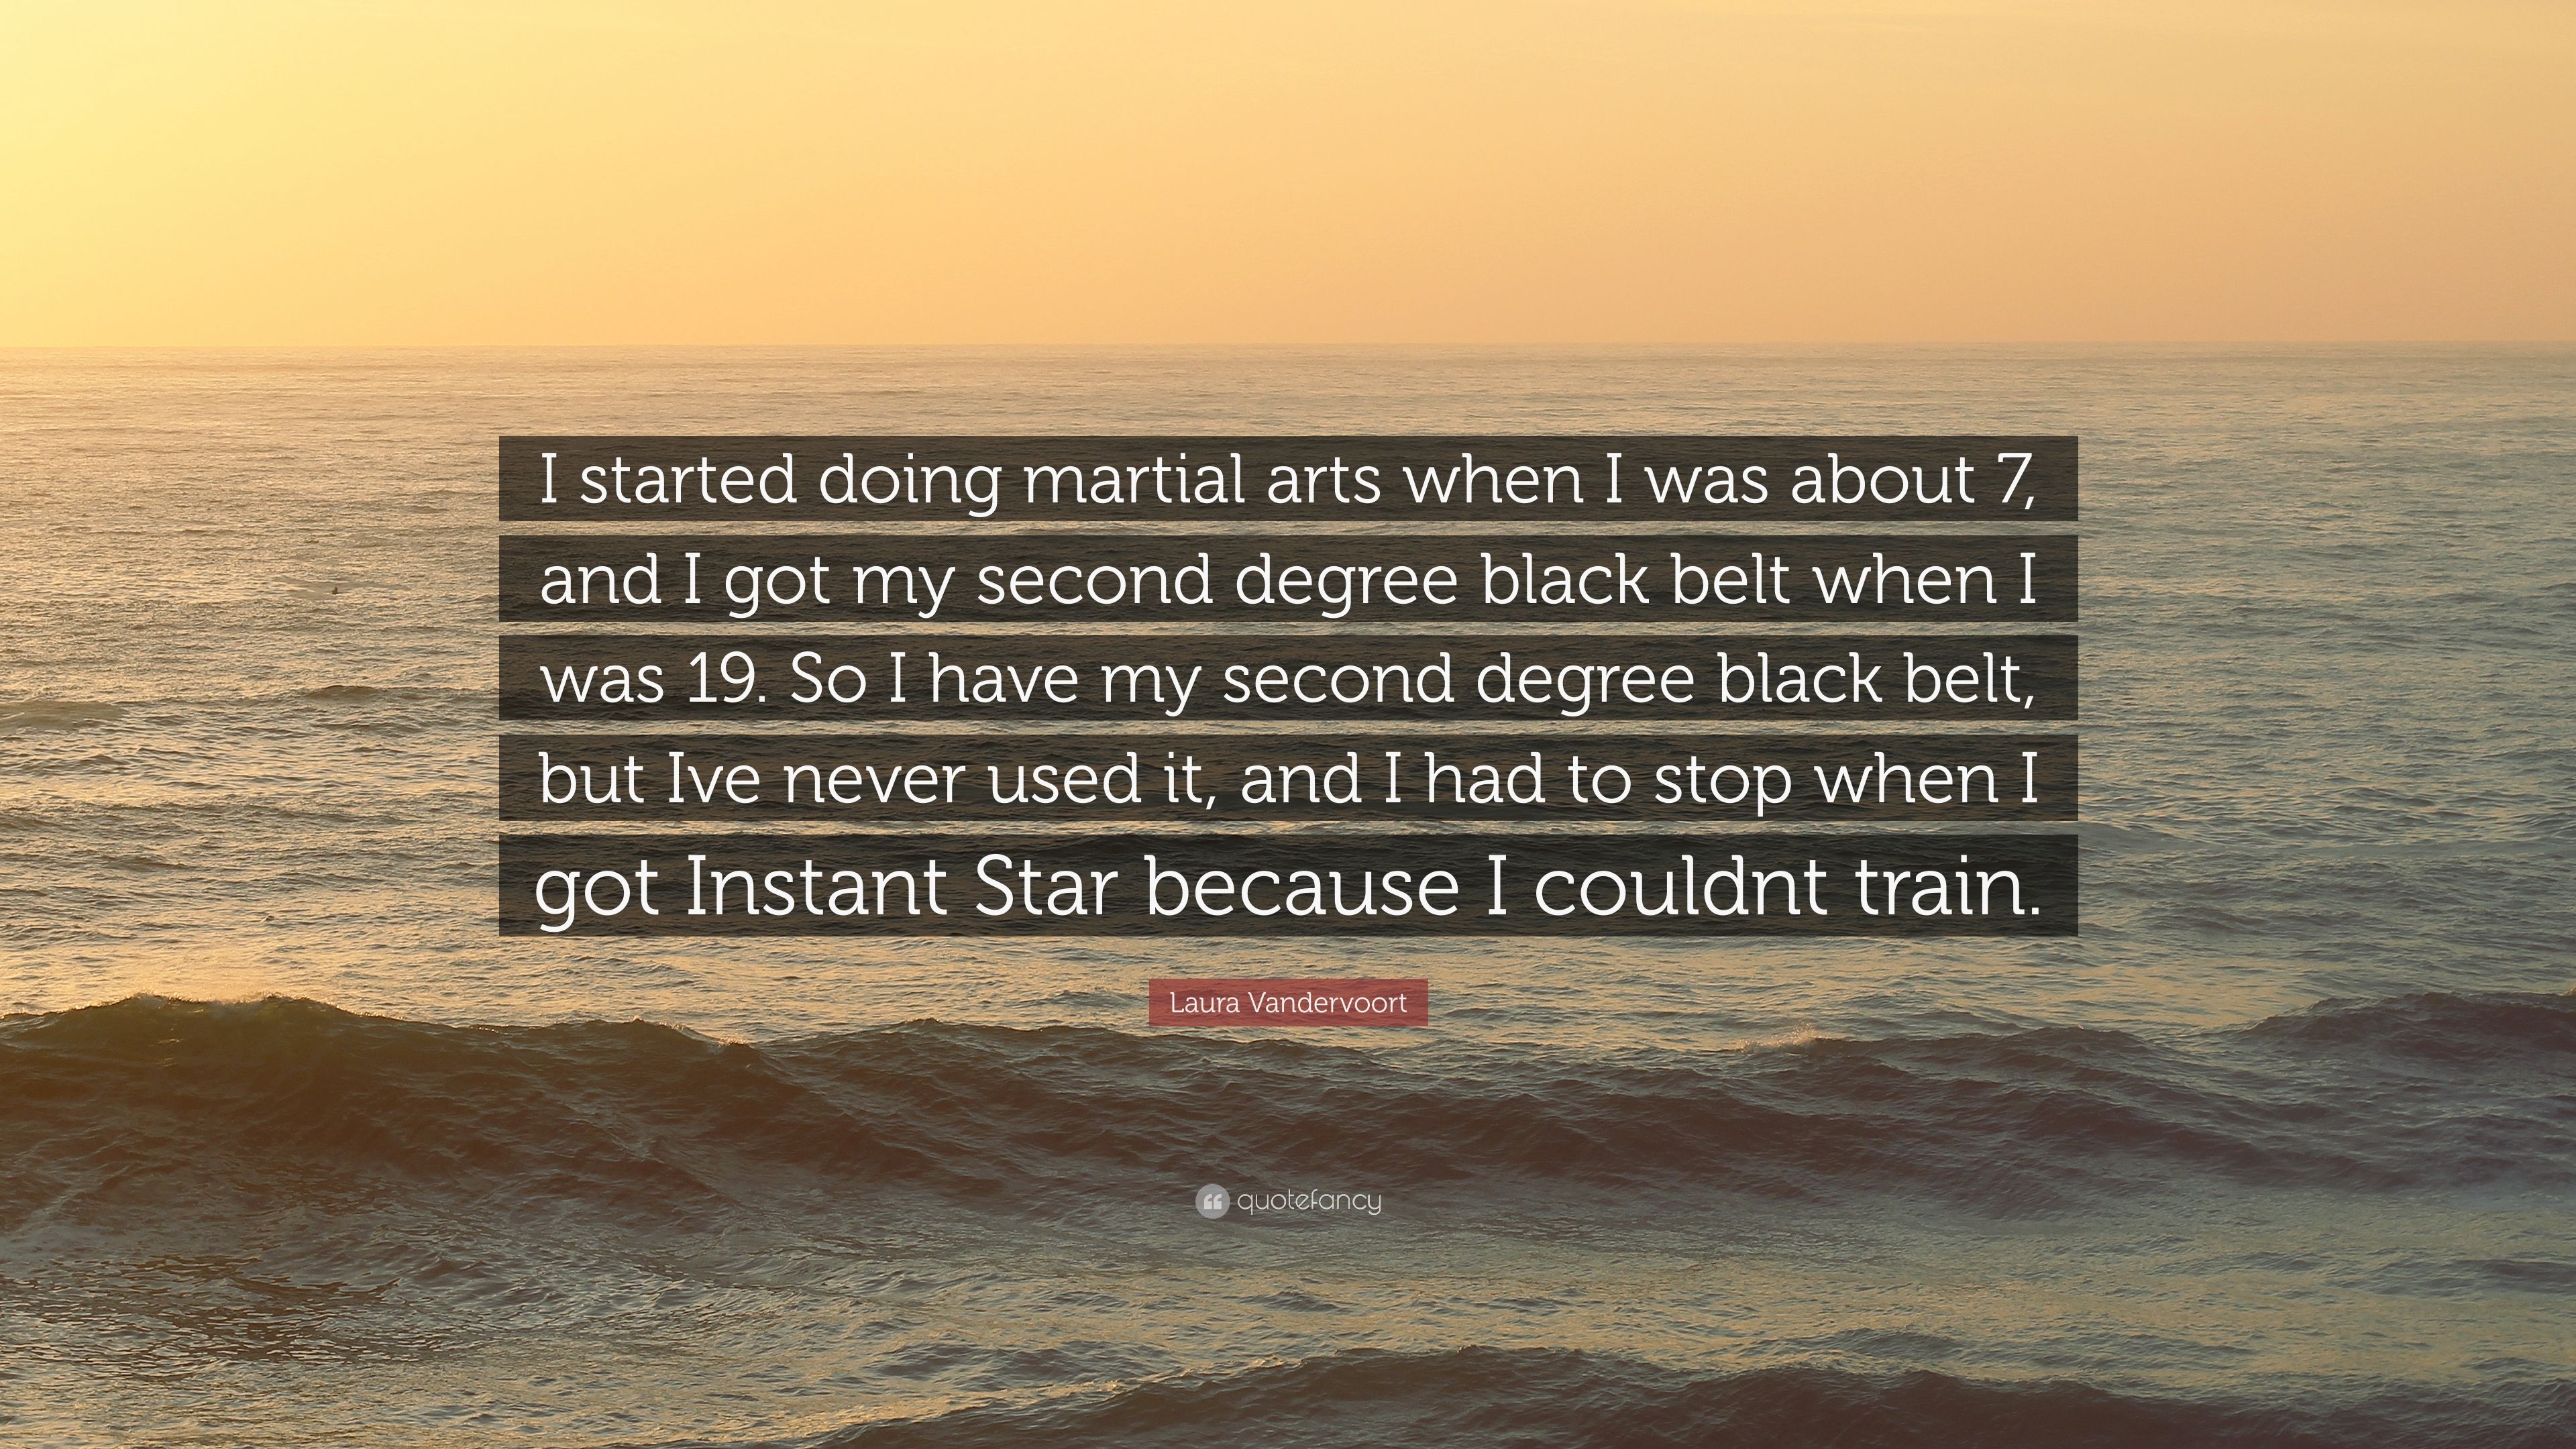 Laura Vandervoort Quote: “I started doing martial arts when I was